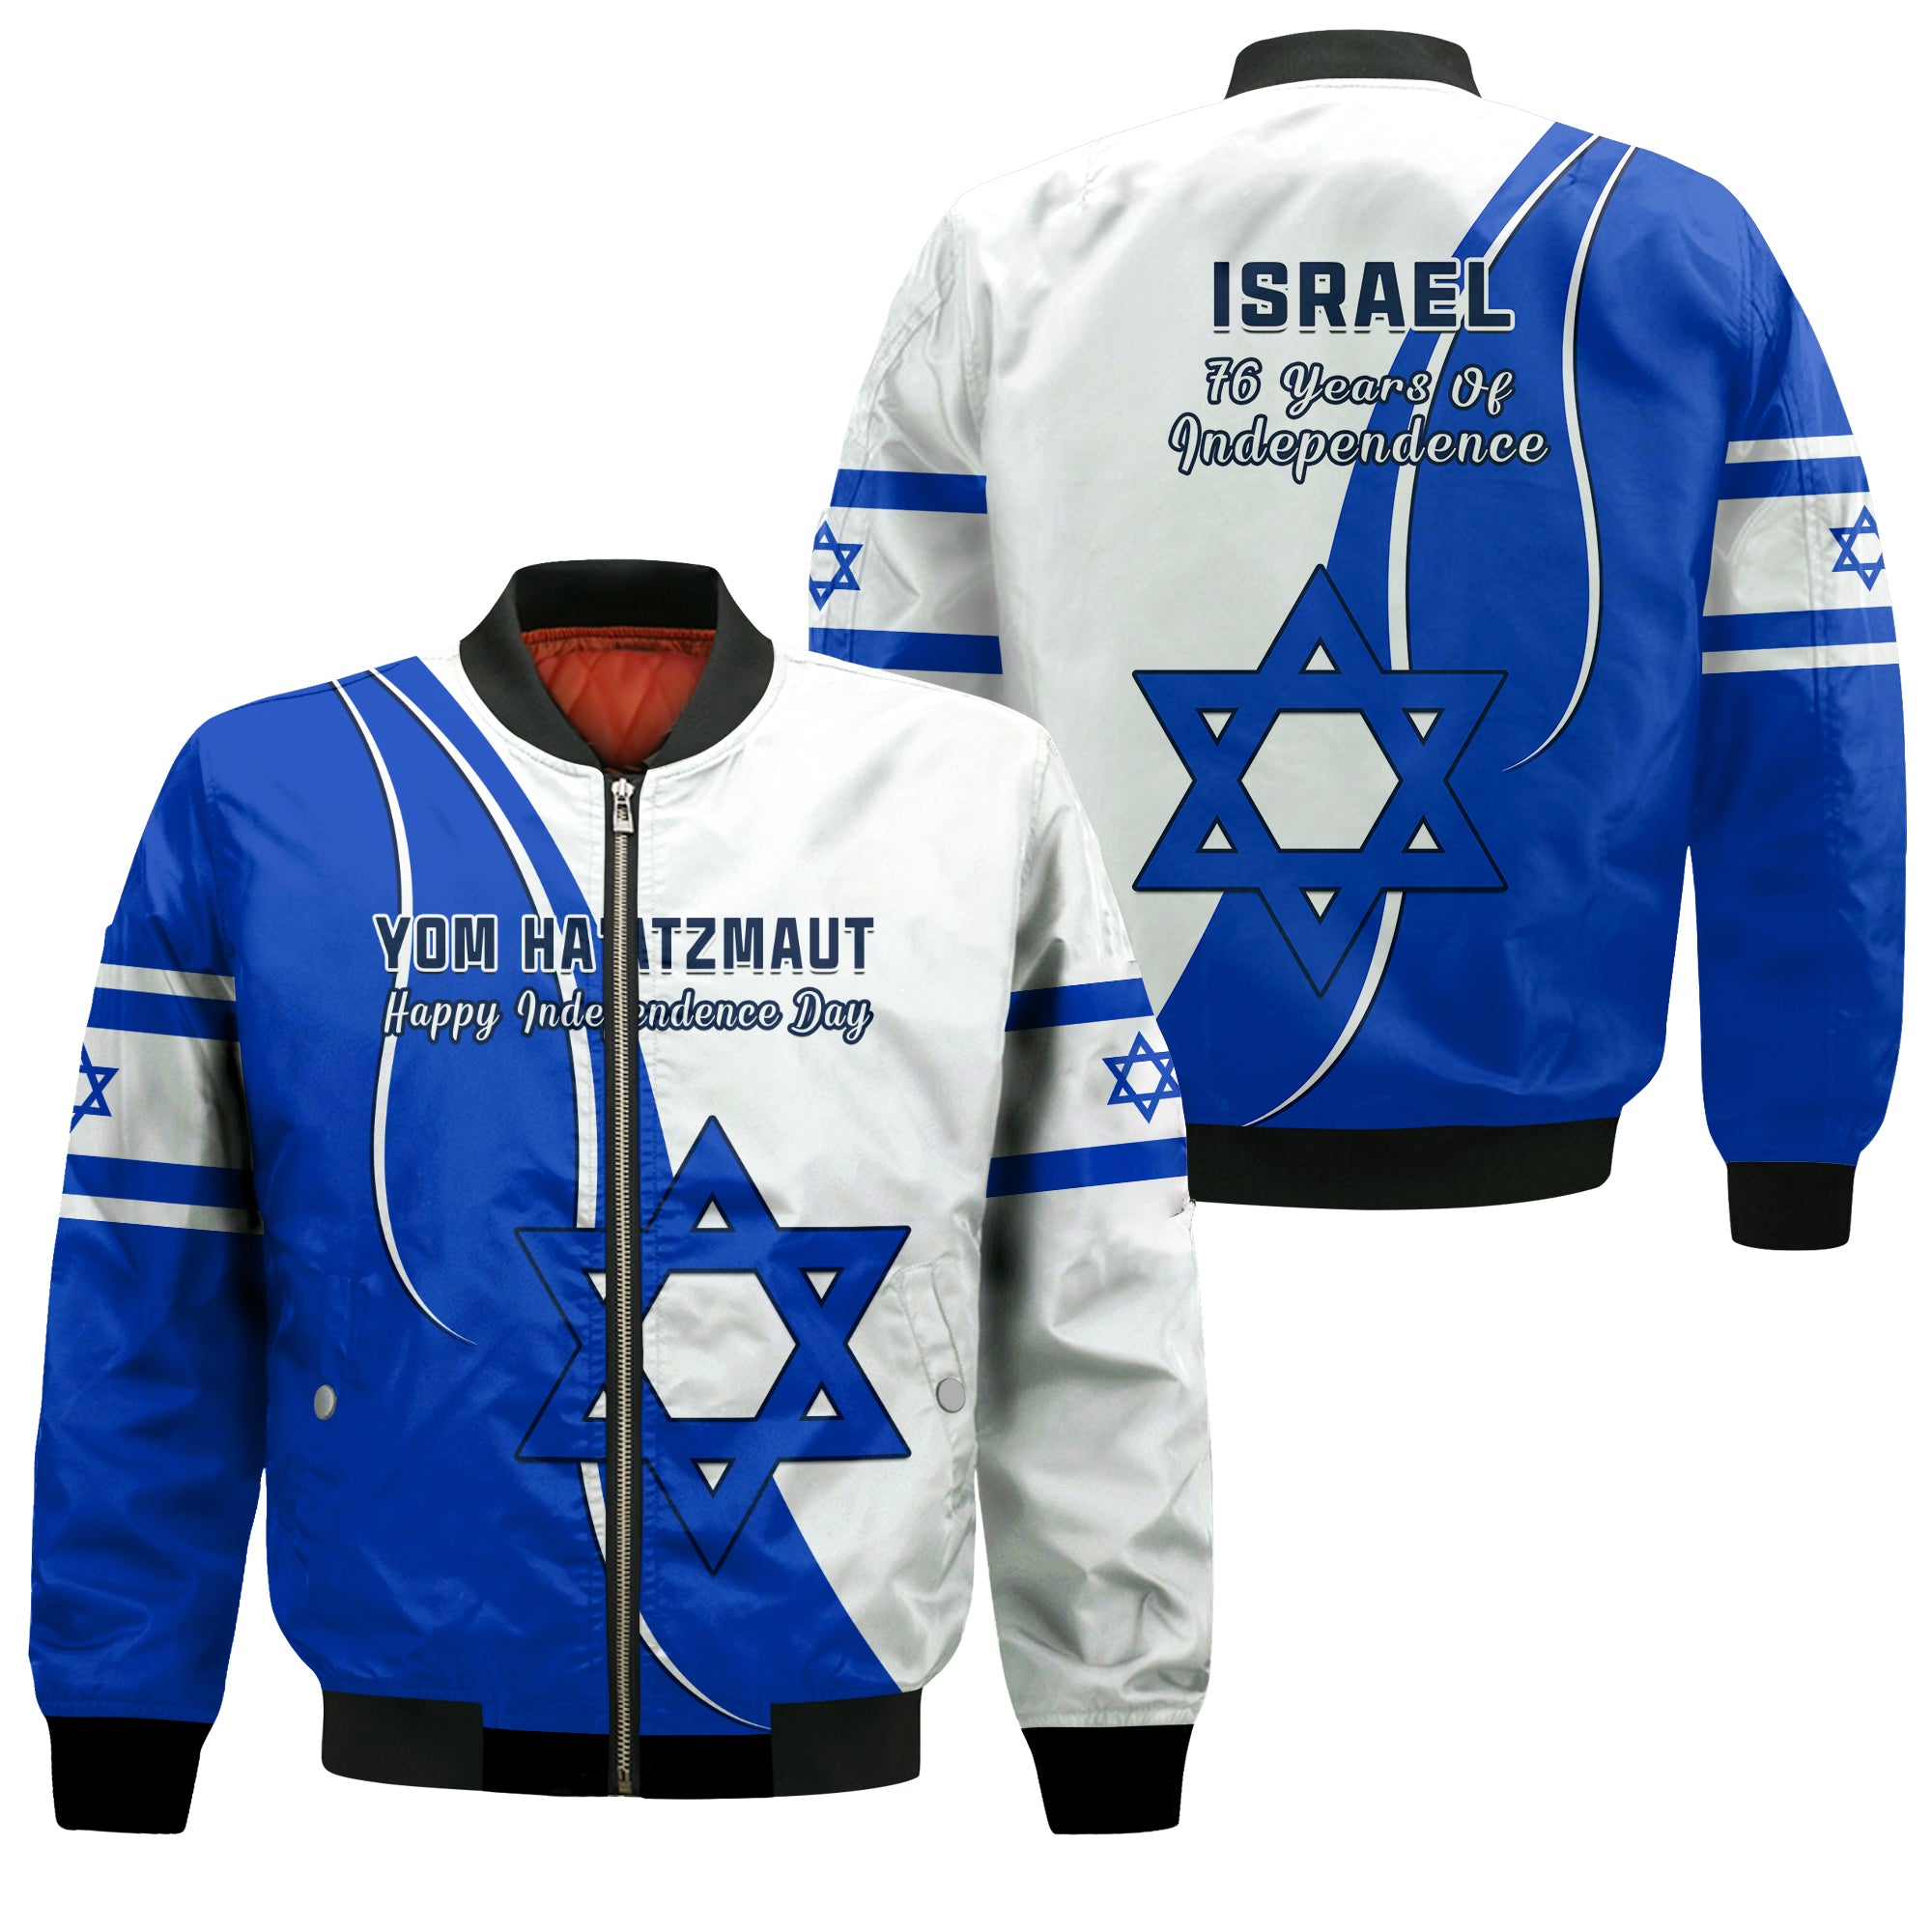 Israel Independence Day Sleeve Zip Bomber Jacket Yom Haatzmaut Curvel Style LT14